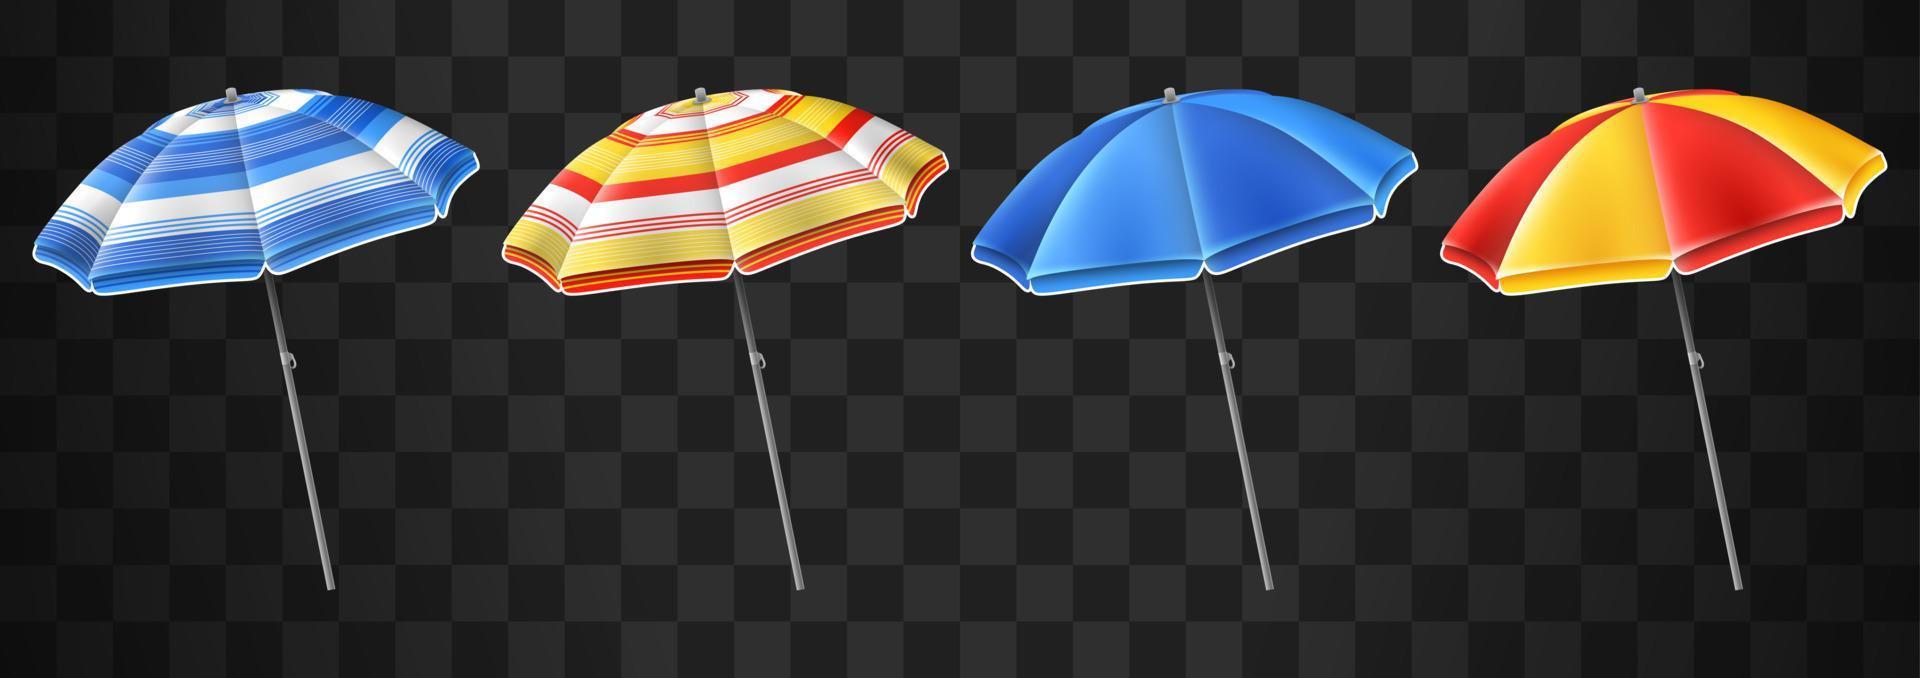 Beach umbrellas set isolated on black background vector